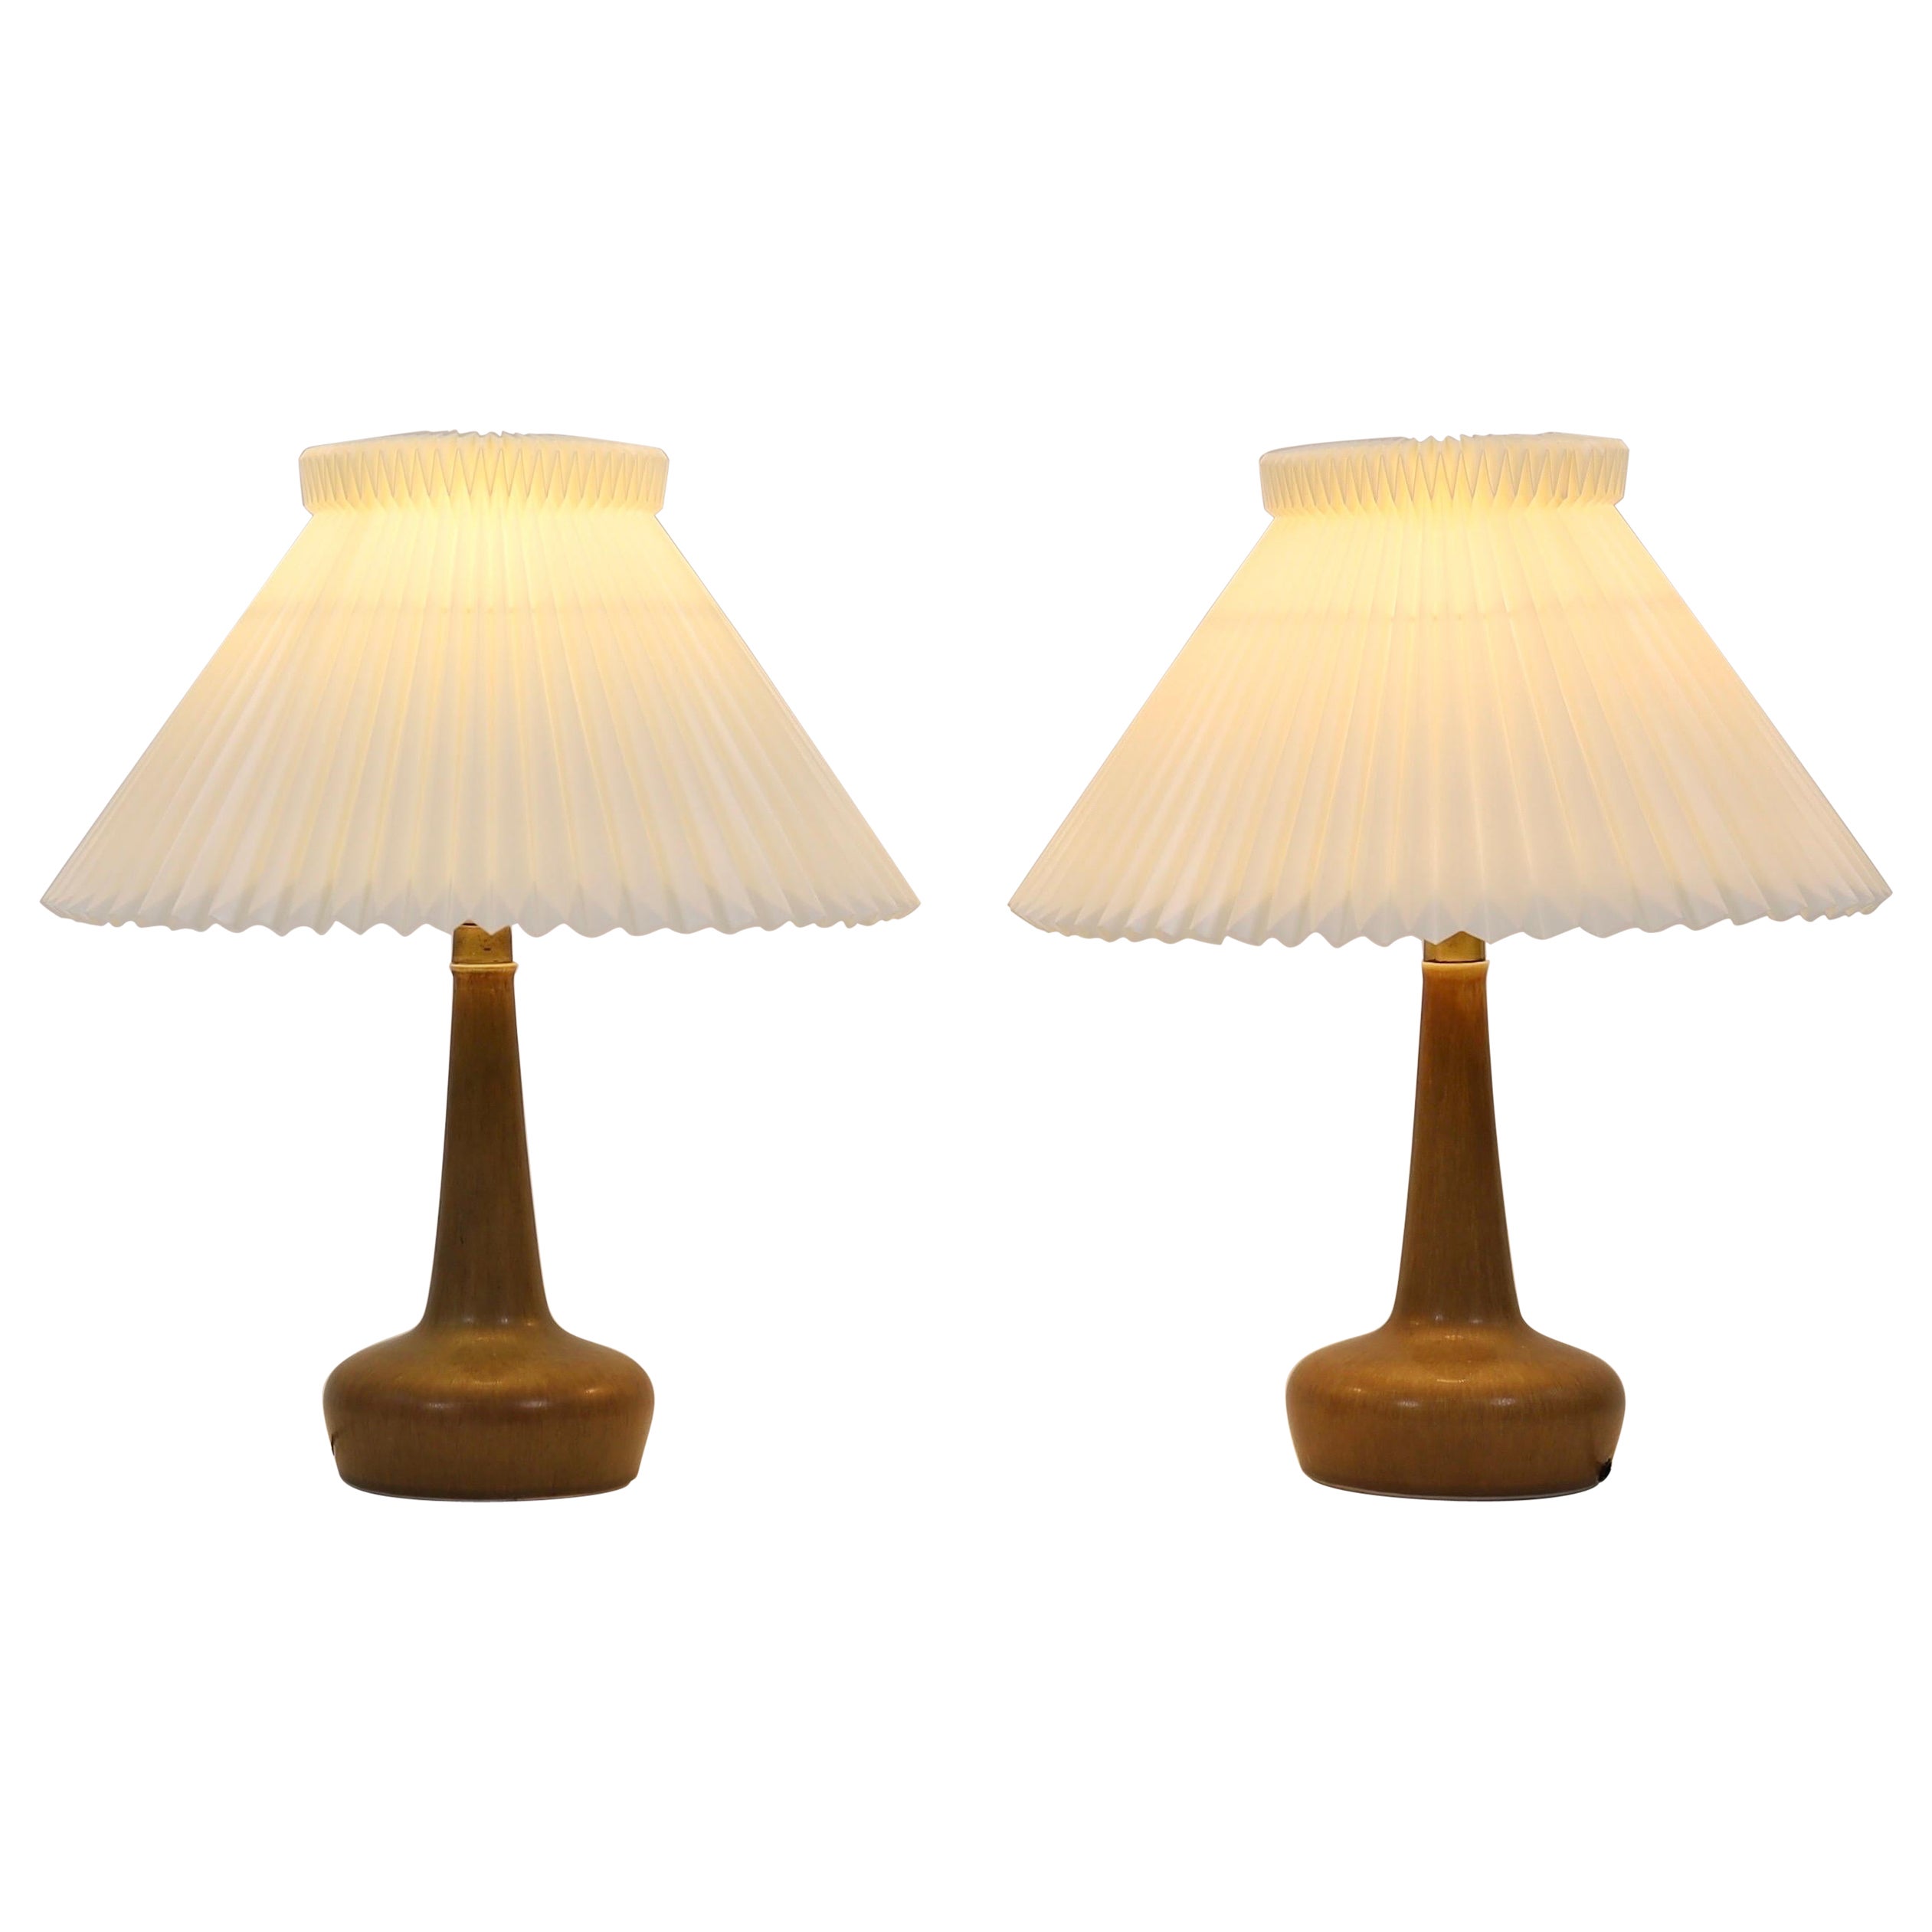 Set of Ceramic Table Lamps by Esben Klint for Le Klint, 1950s, Denmark For Sale